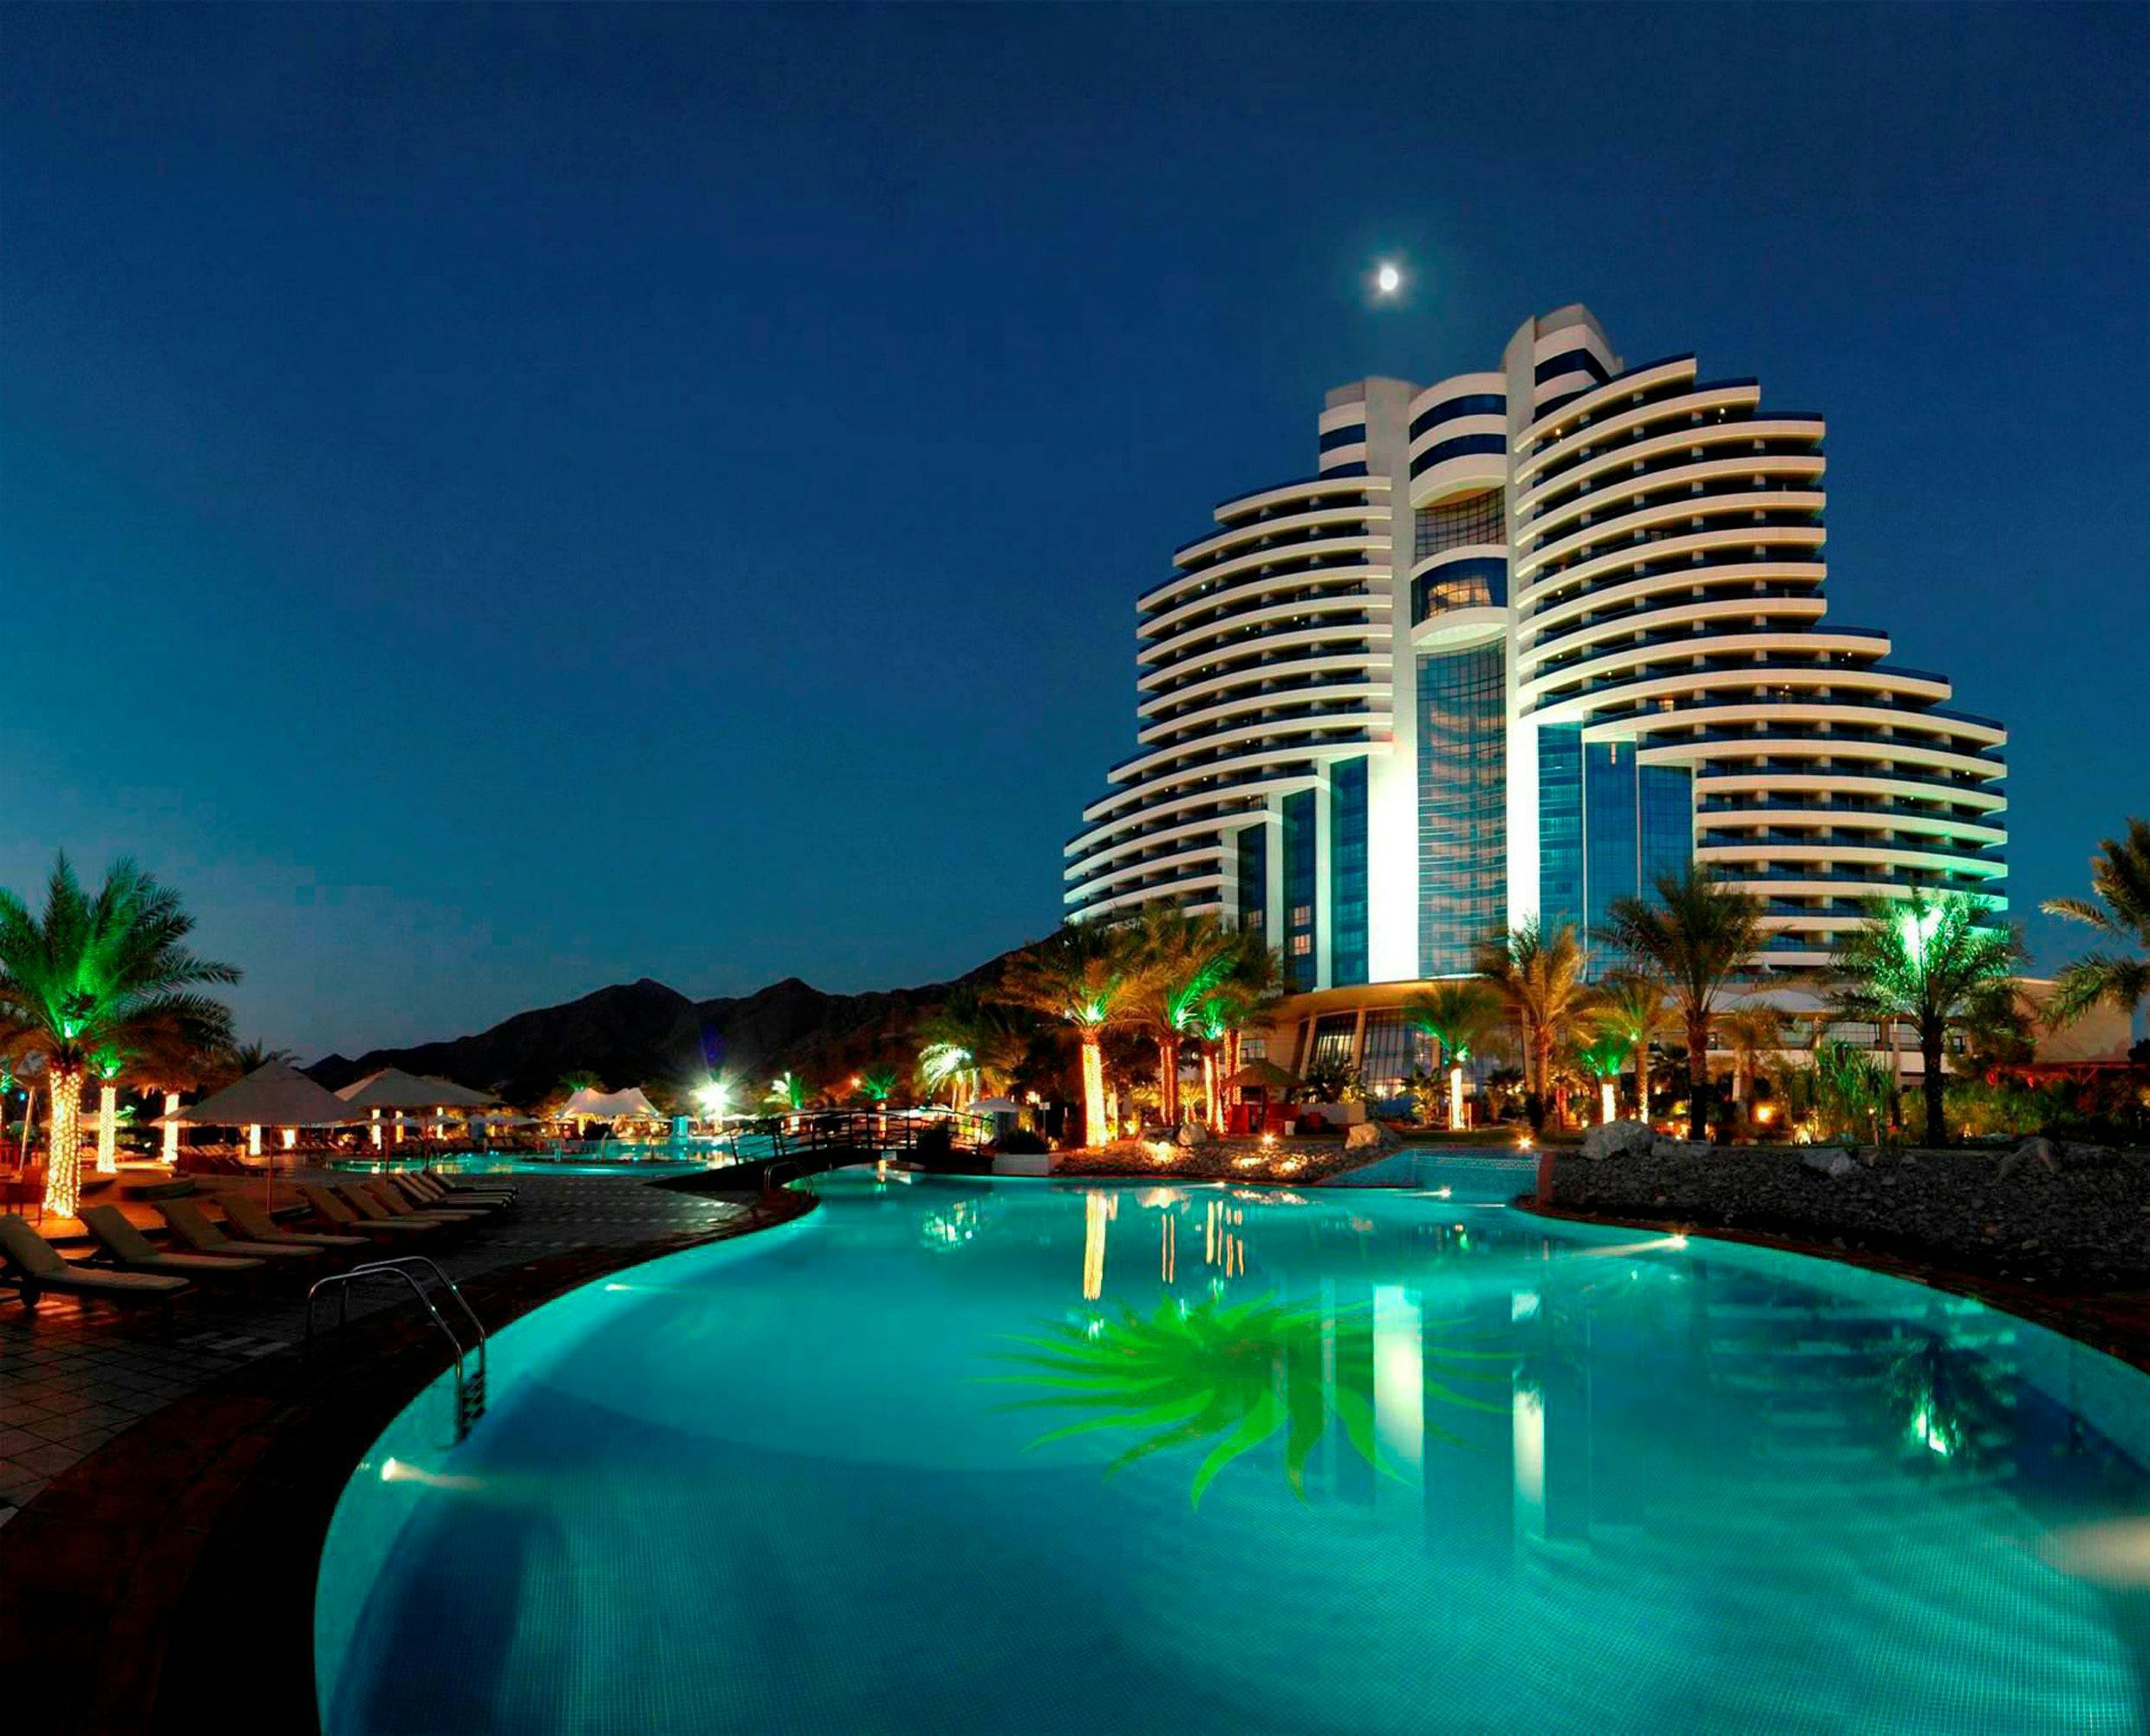 Le Meridien Al Aqah Beach Resort Daycation mit Strand- und Poolzugang